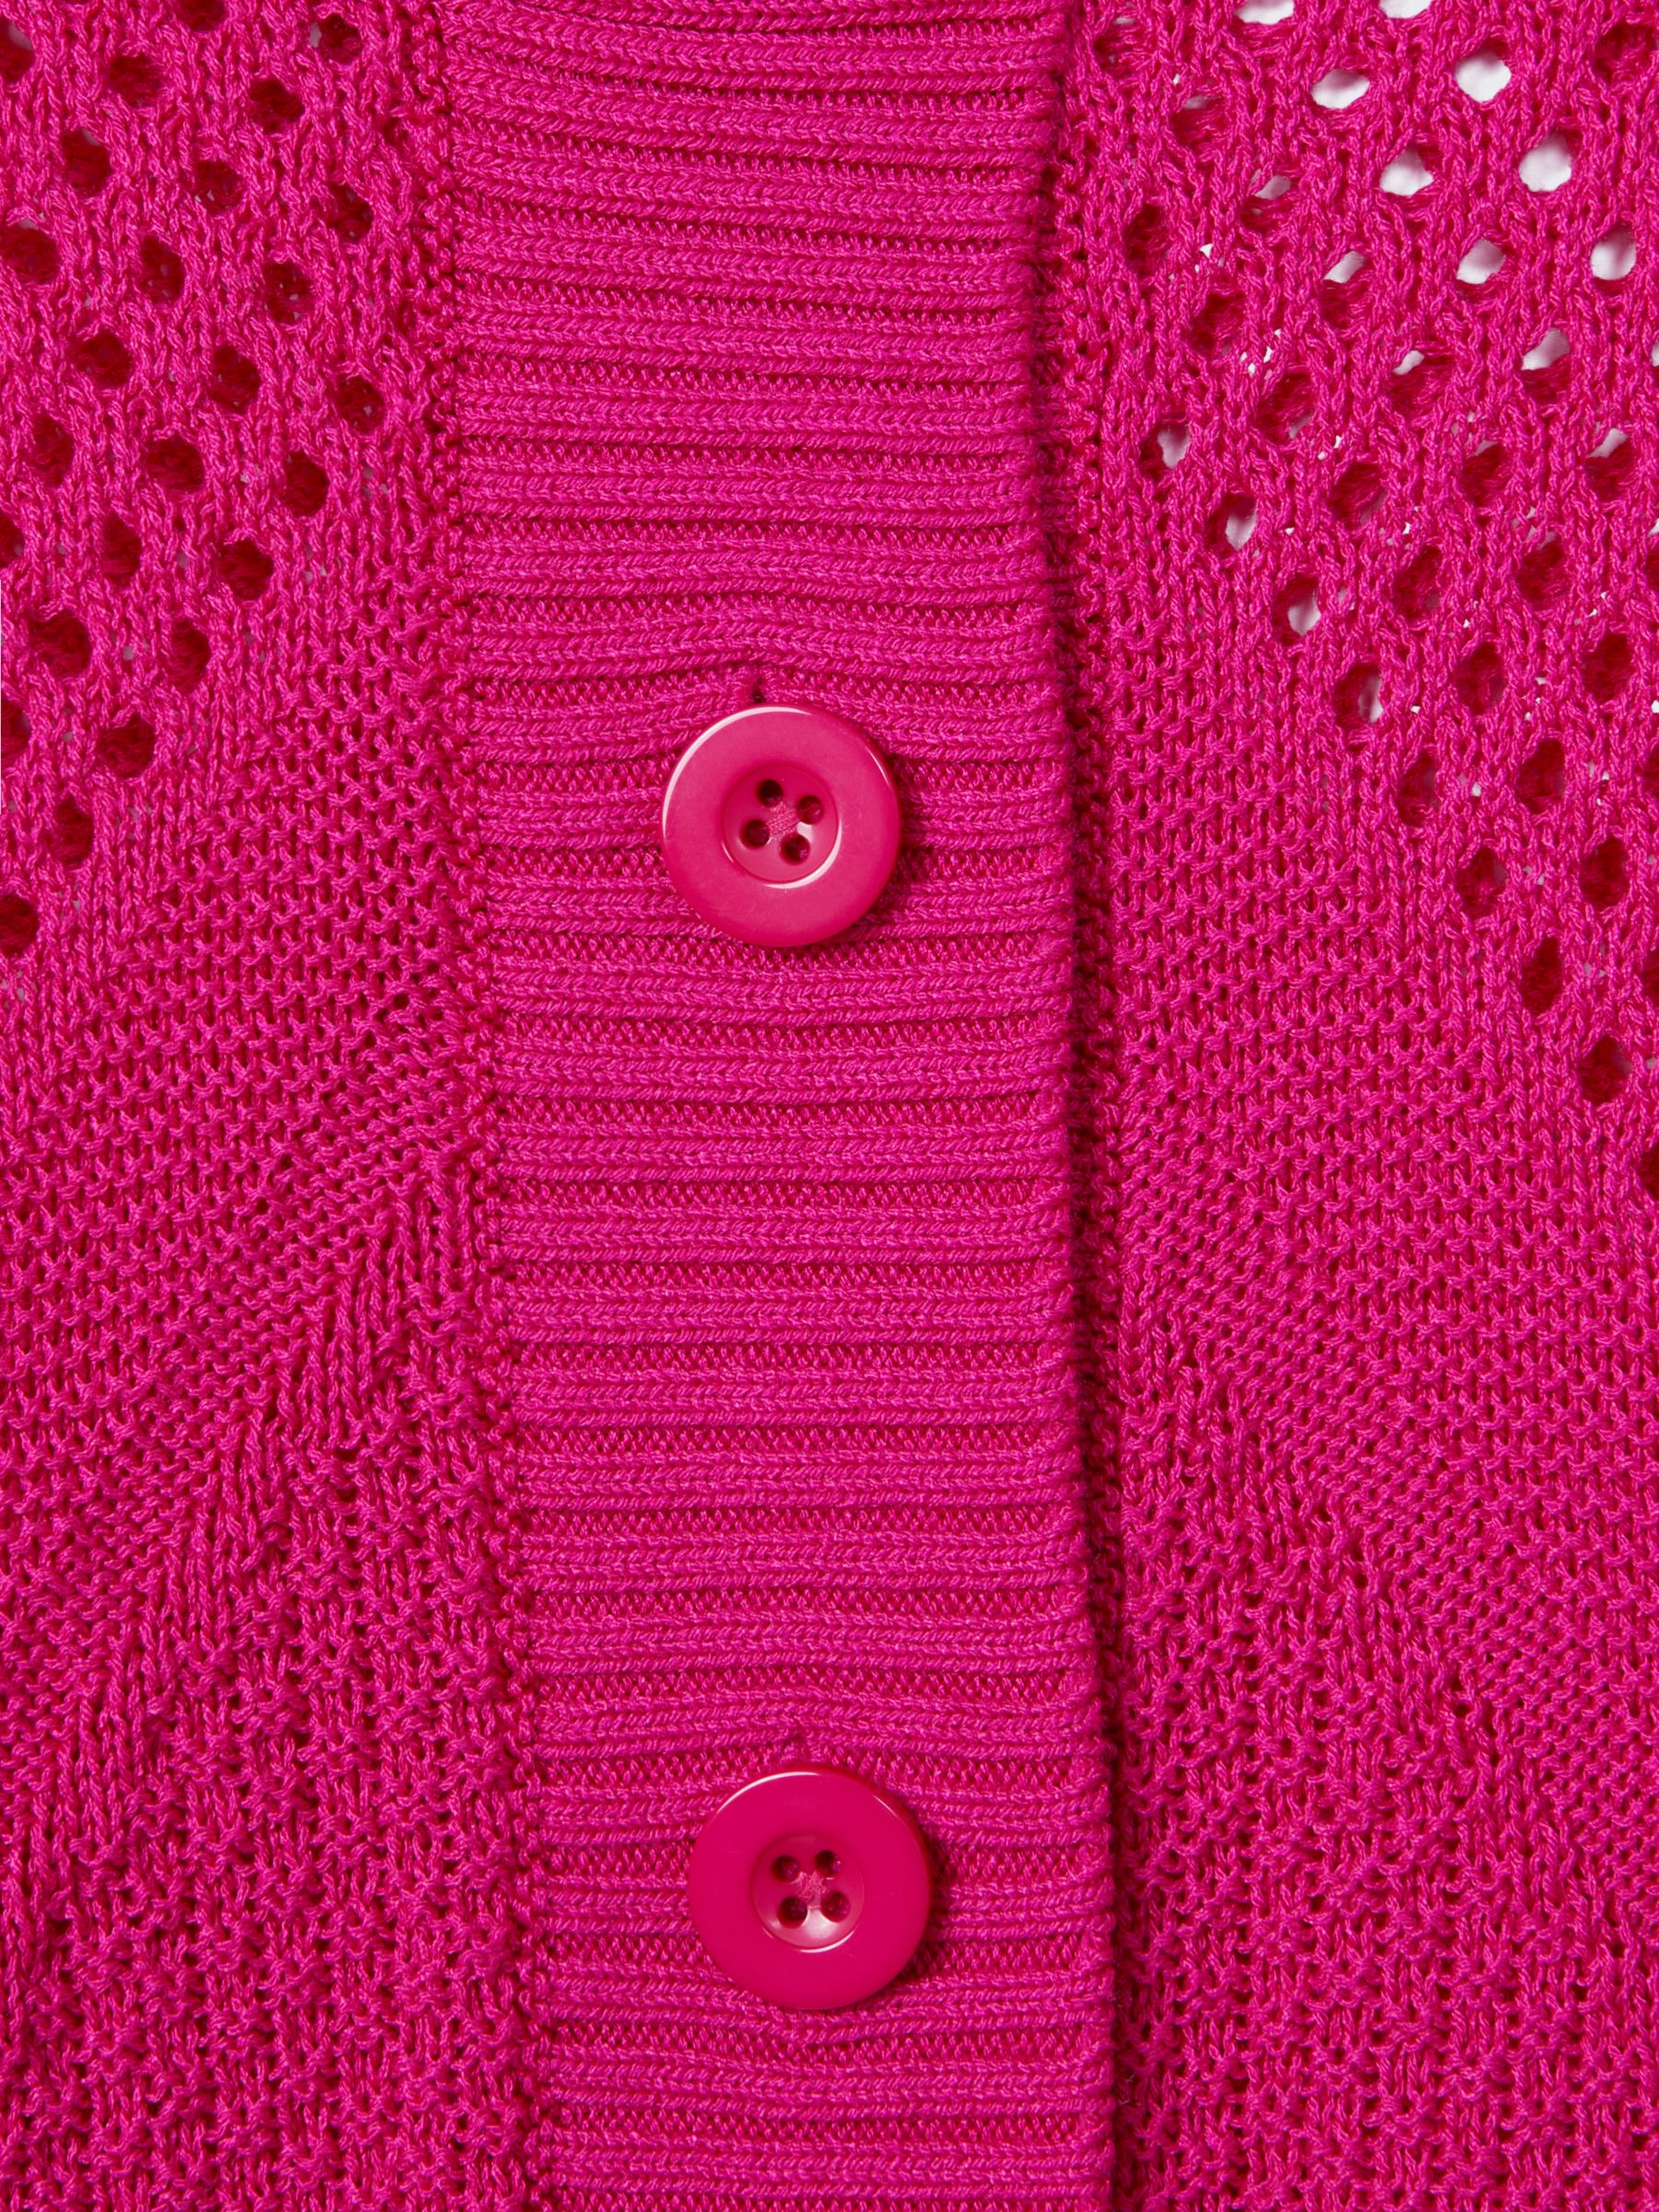 FLORERE Crochet Detail Cardigan, Bright Pink, 8